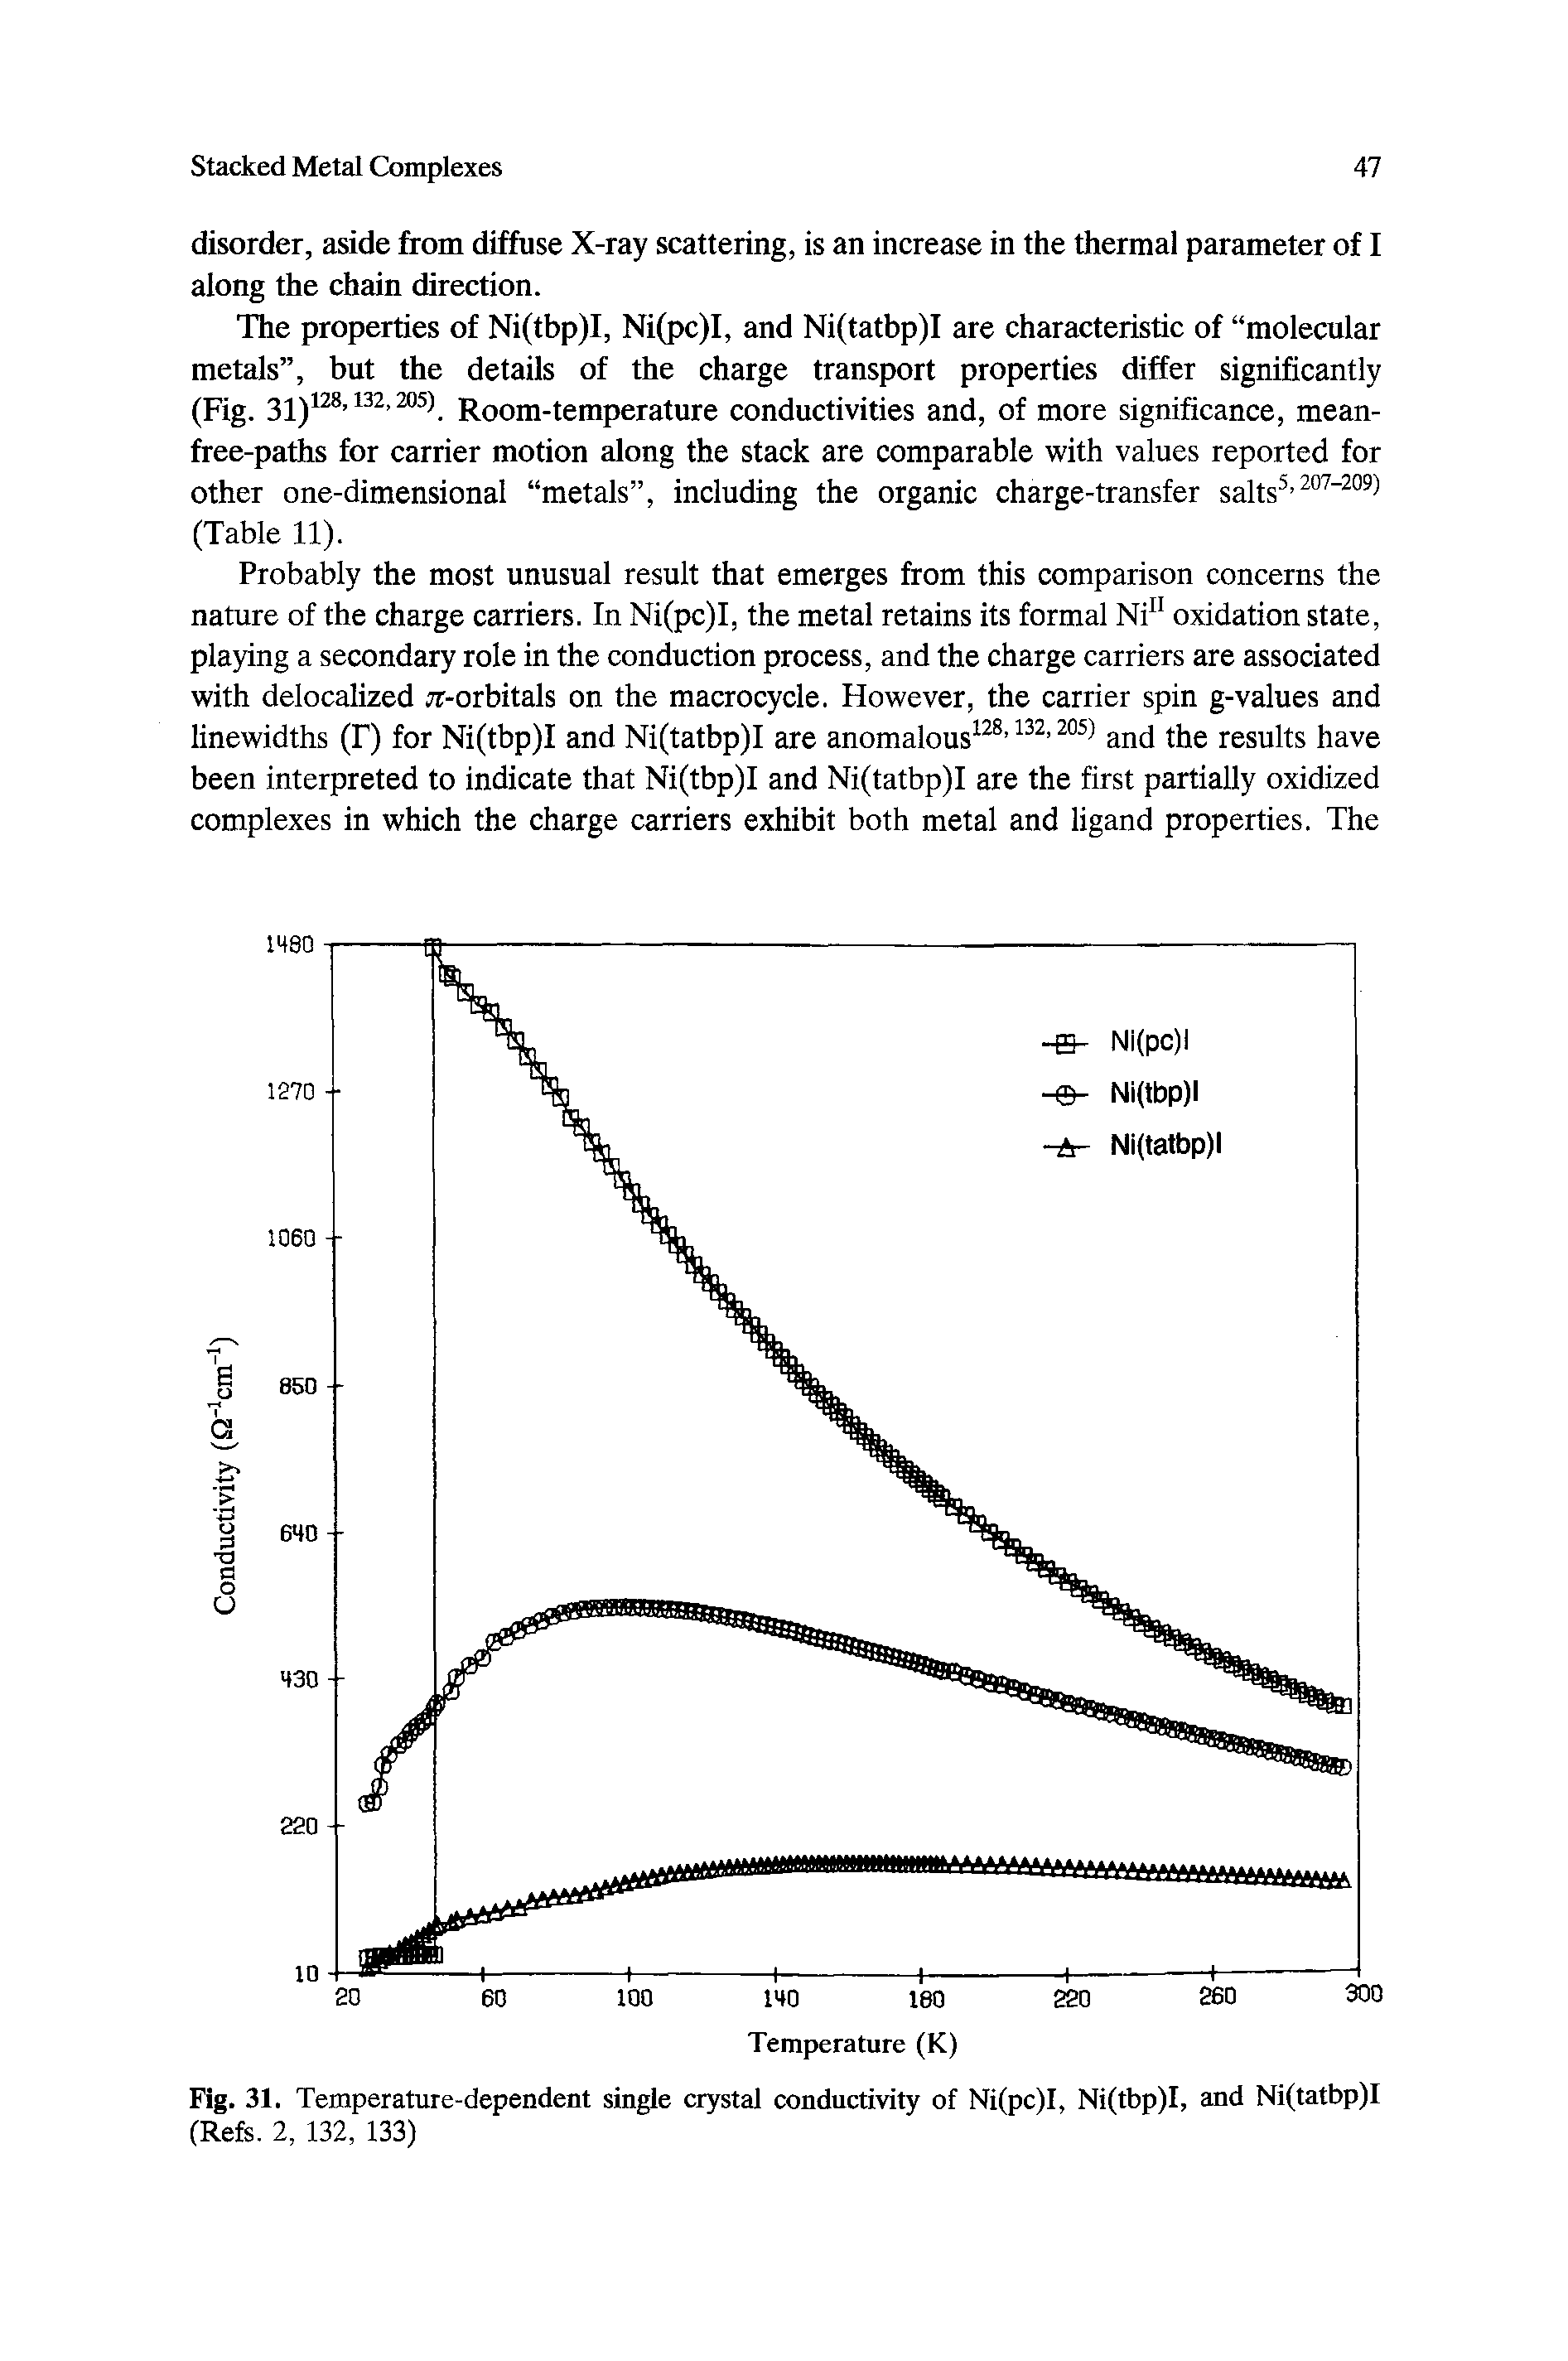 Fig. 31. Temperature-dependent single crystal conductivity of Ni(pc)I, Ni(tbp)I, and Ni(tatbp)I (Refs. 2, 132, 133)...